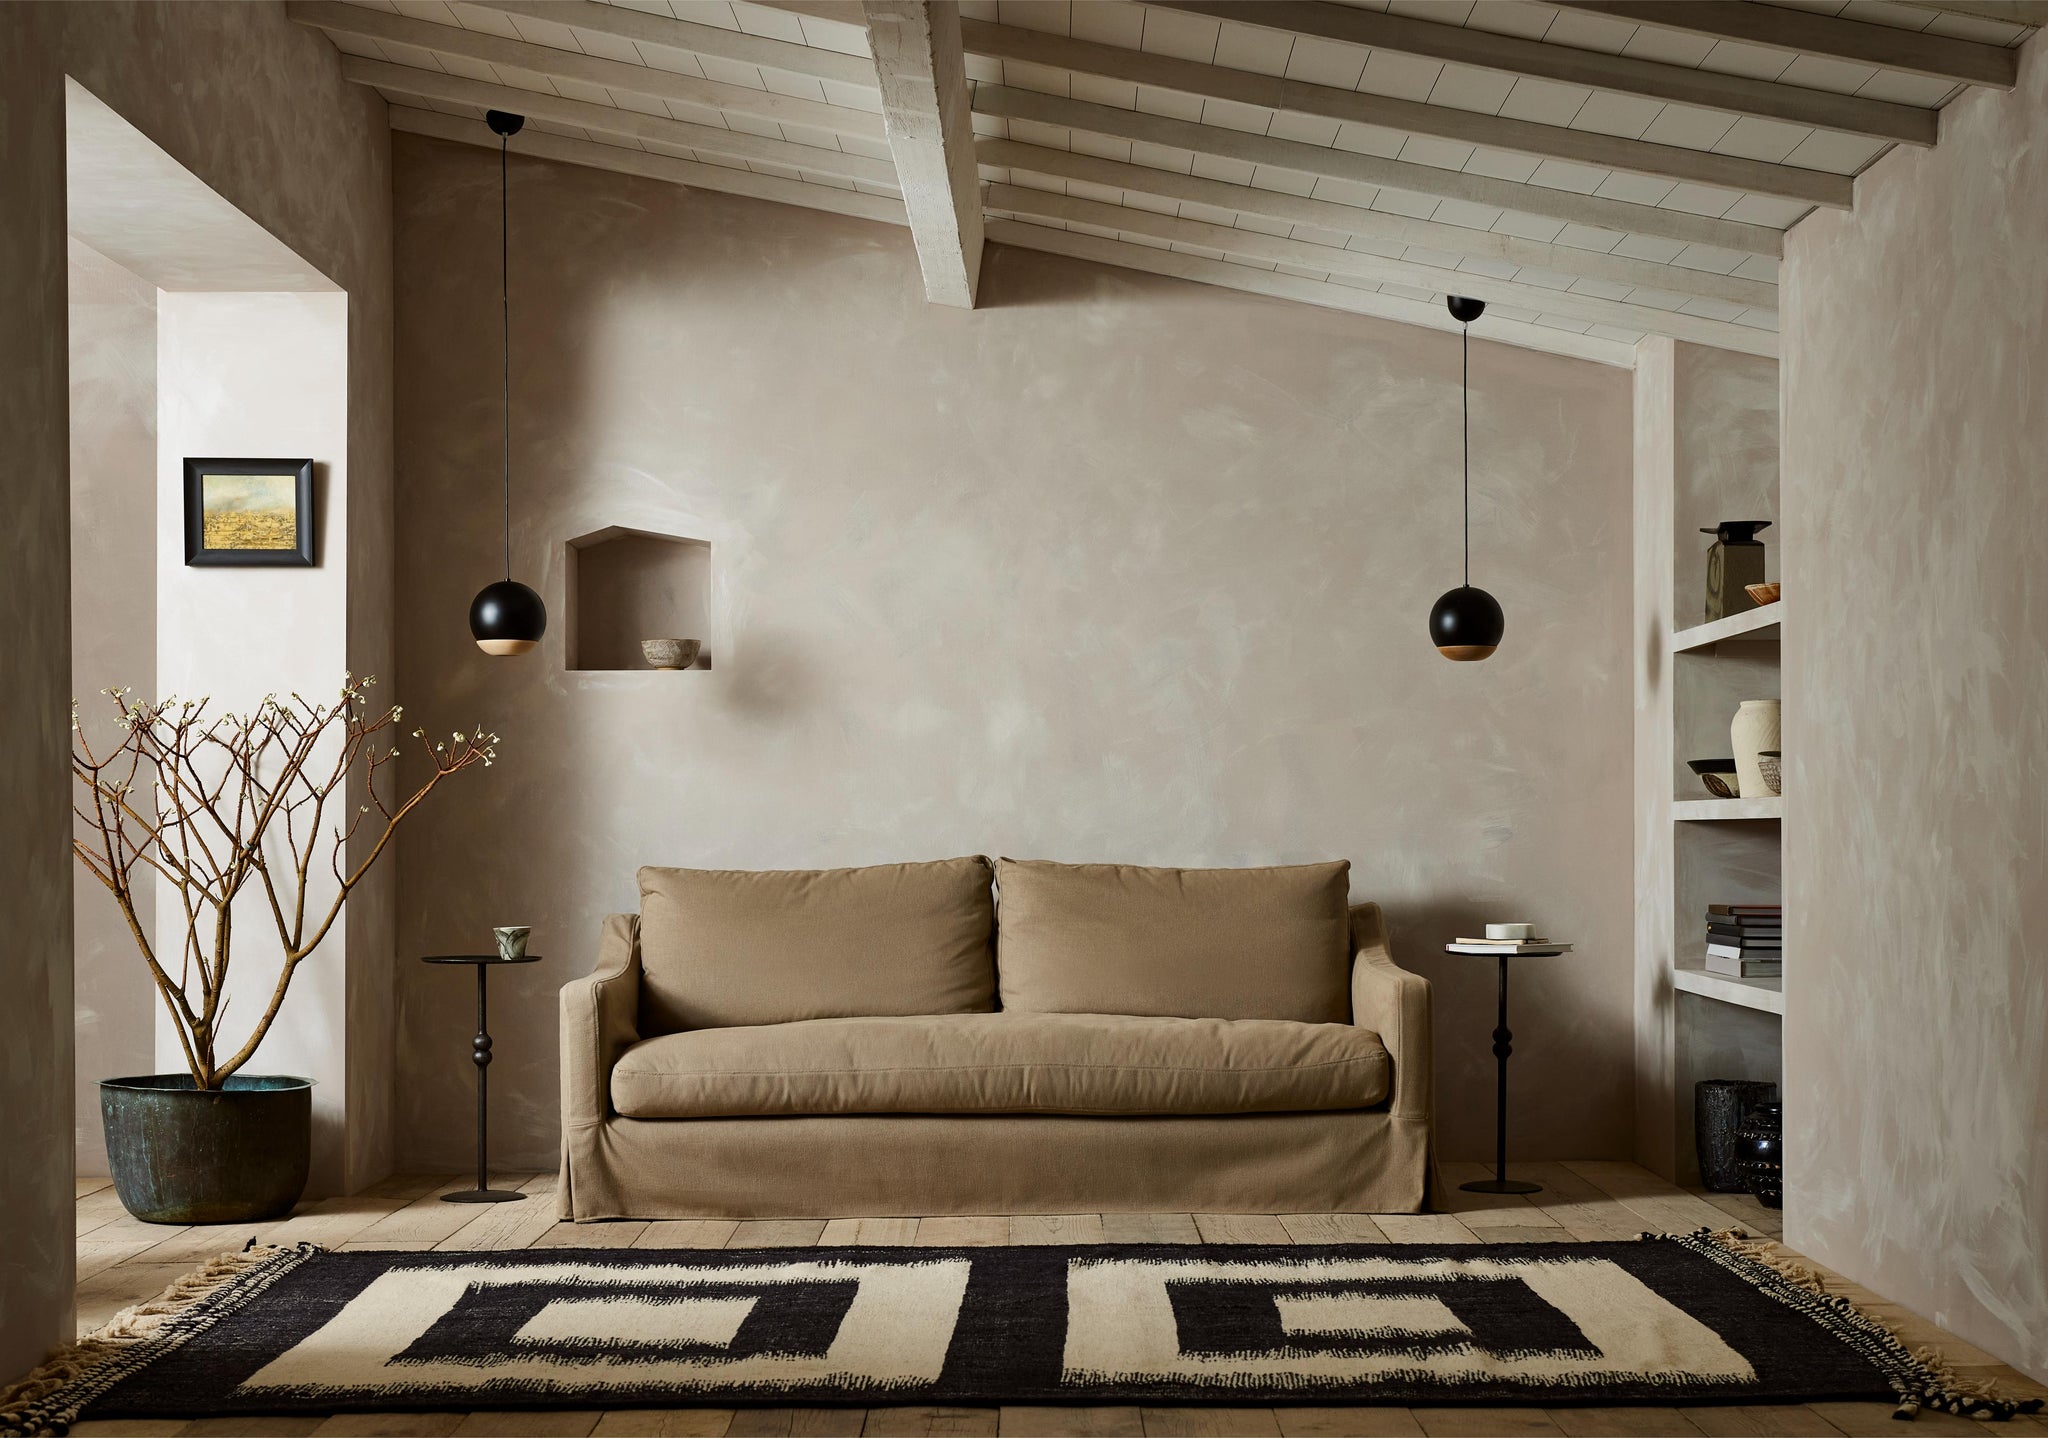 'The Conrad' skirted Bespoke Sofa by TallBoy Interiors